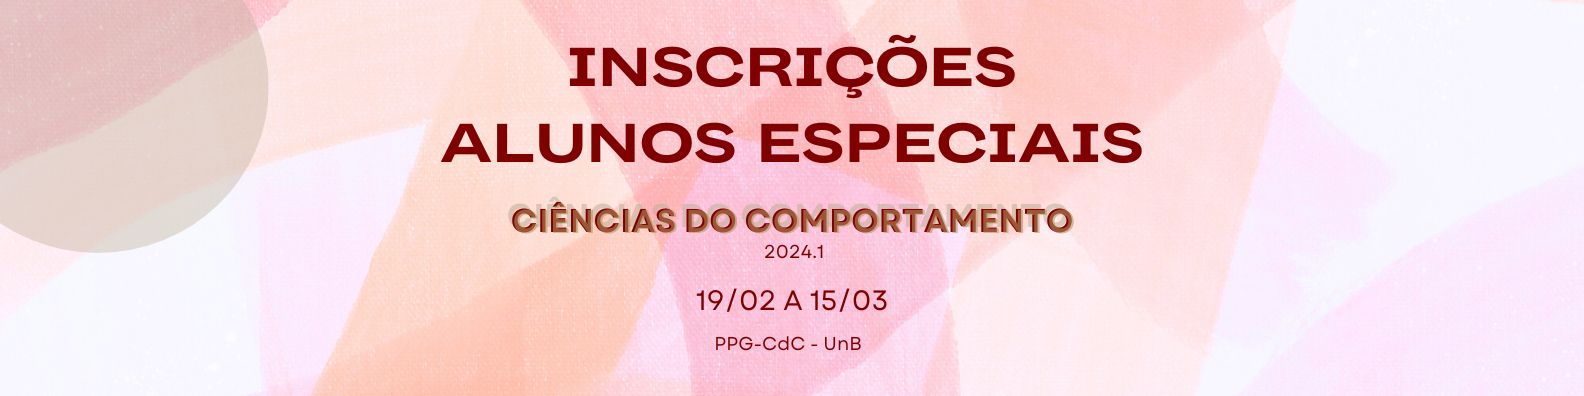 https://cdc.unb.br/index.php/ingresso/aluno-especial